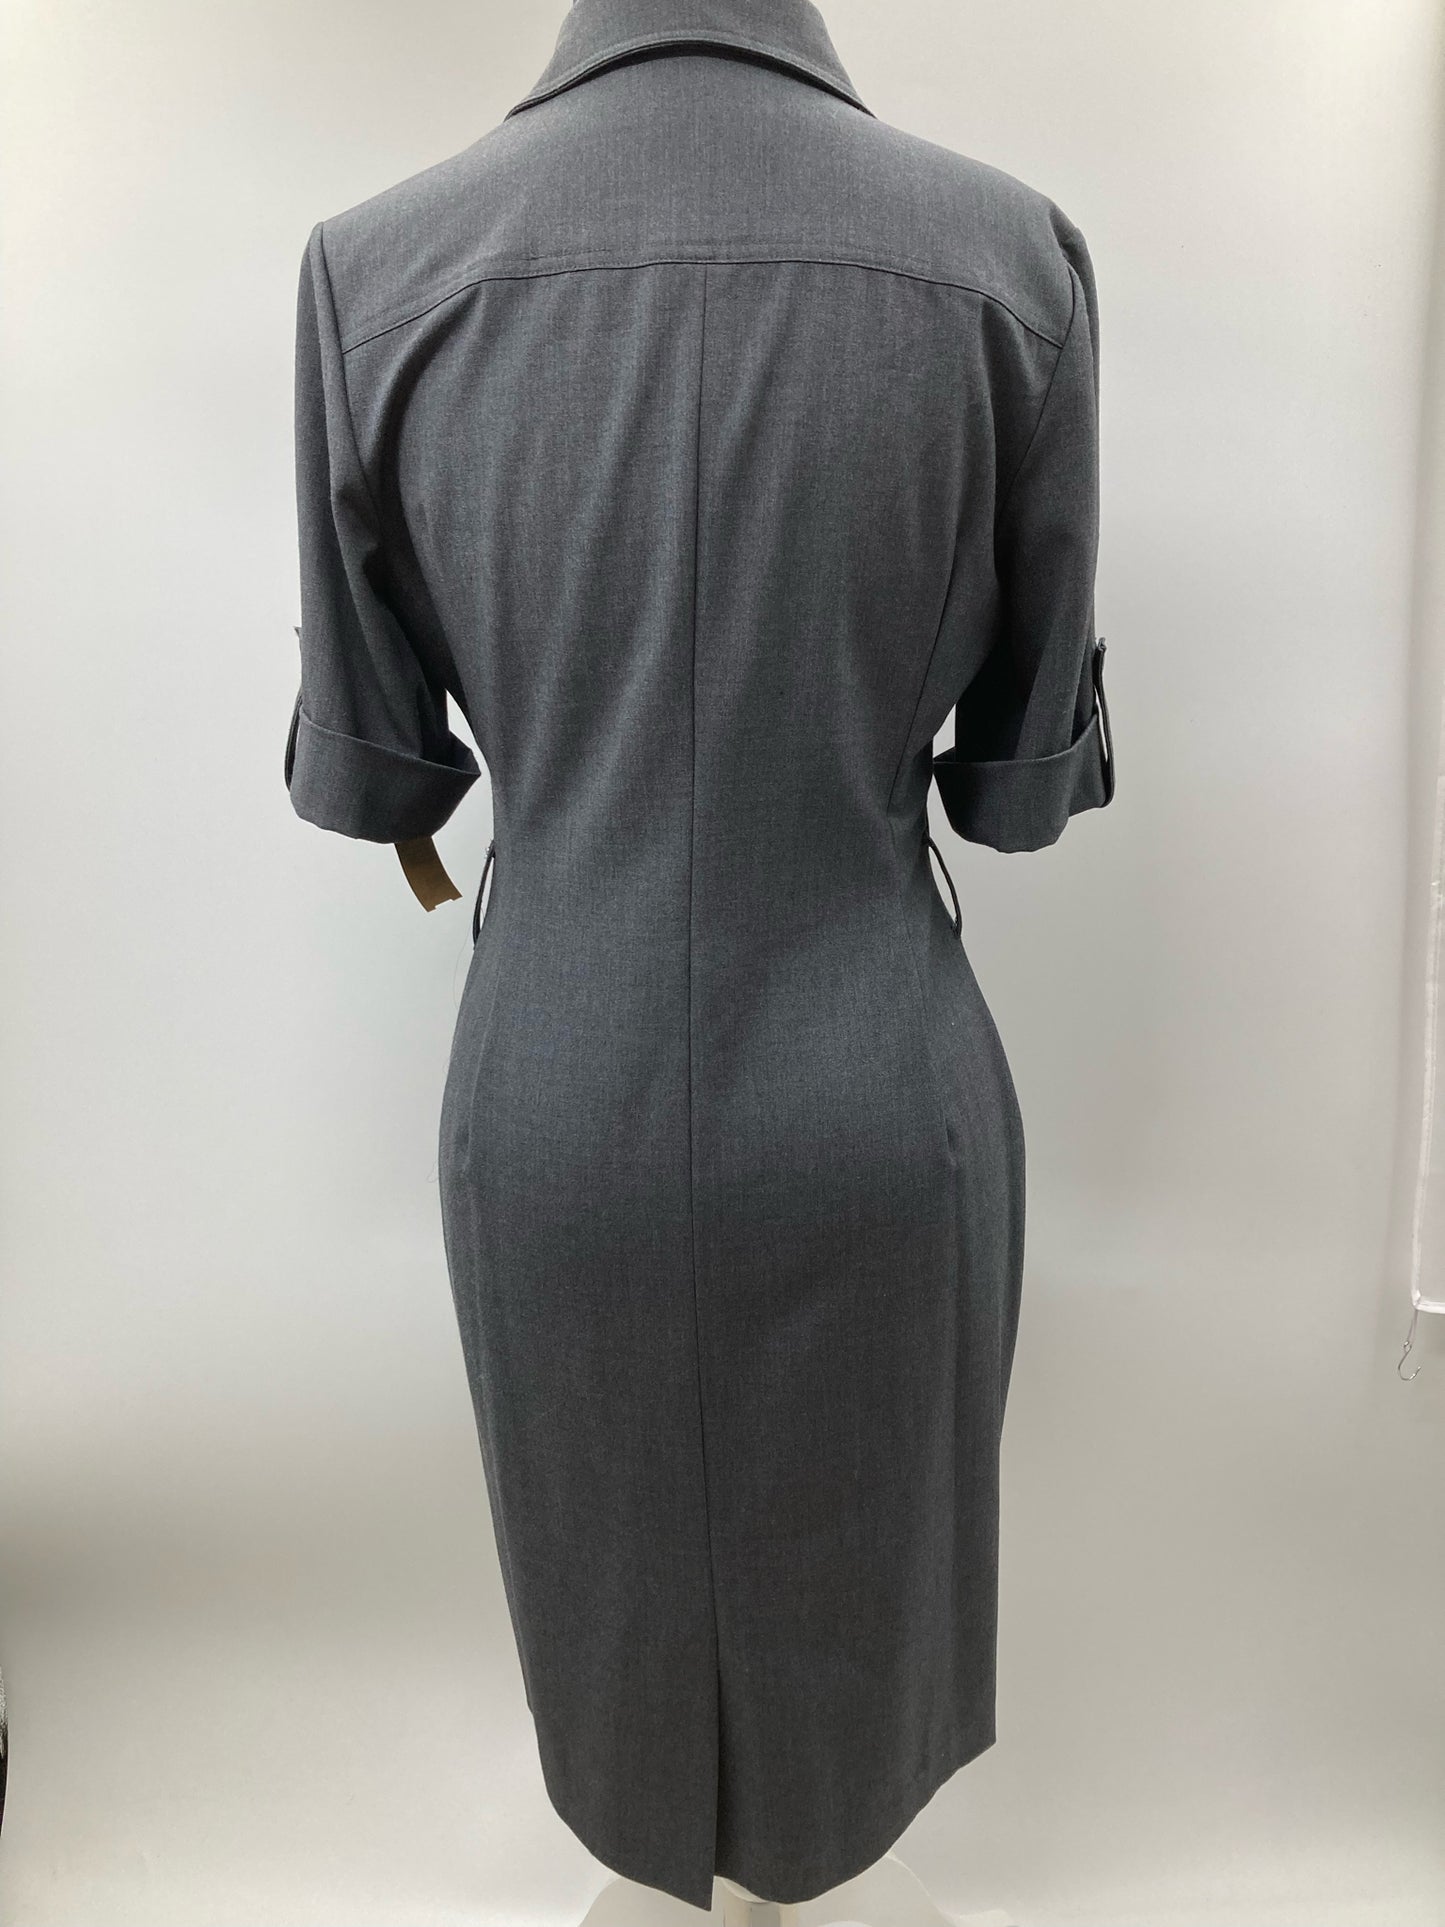 
                  
                    Women's Size 8 Calvin Klien Gray Dress
                  
                